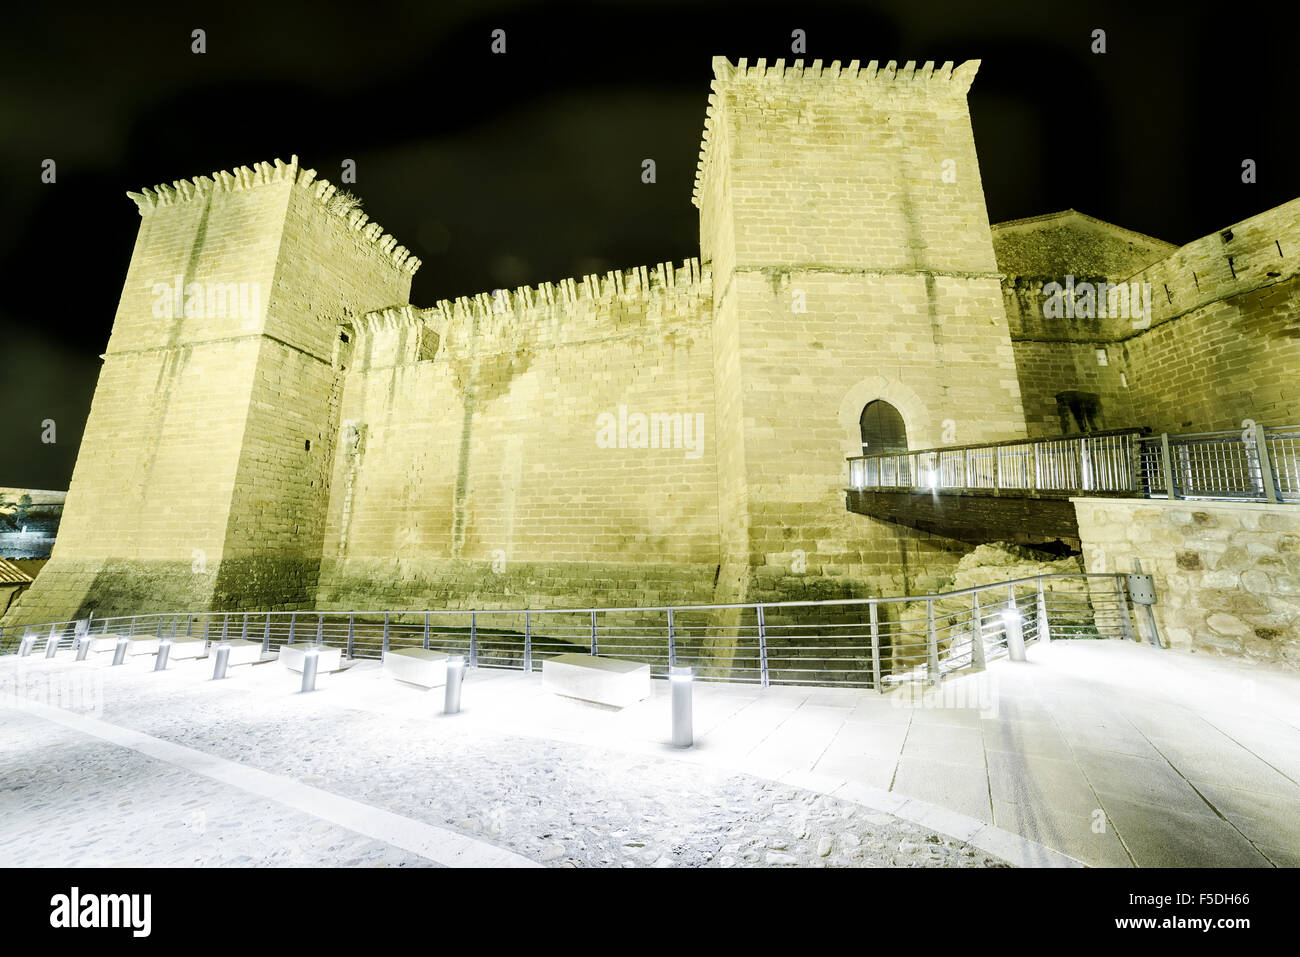 Juan Fernandez de Heredia palazzo fortificato di notte. Mora de Rubielos, Comarca di Gudar-Javalambre, Teruel Aragona, Spagna Foto Stock